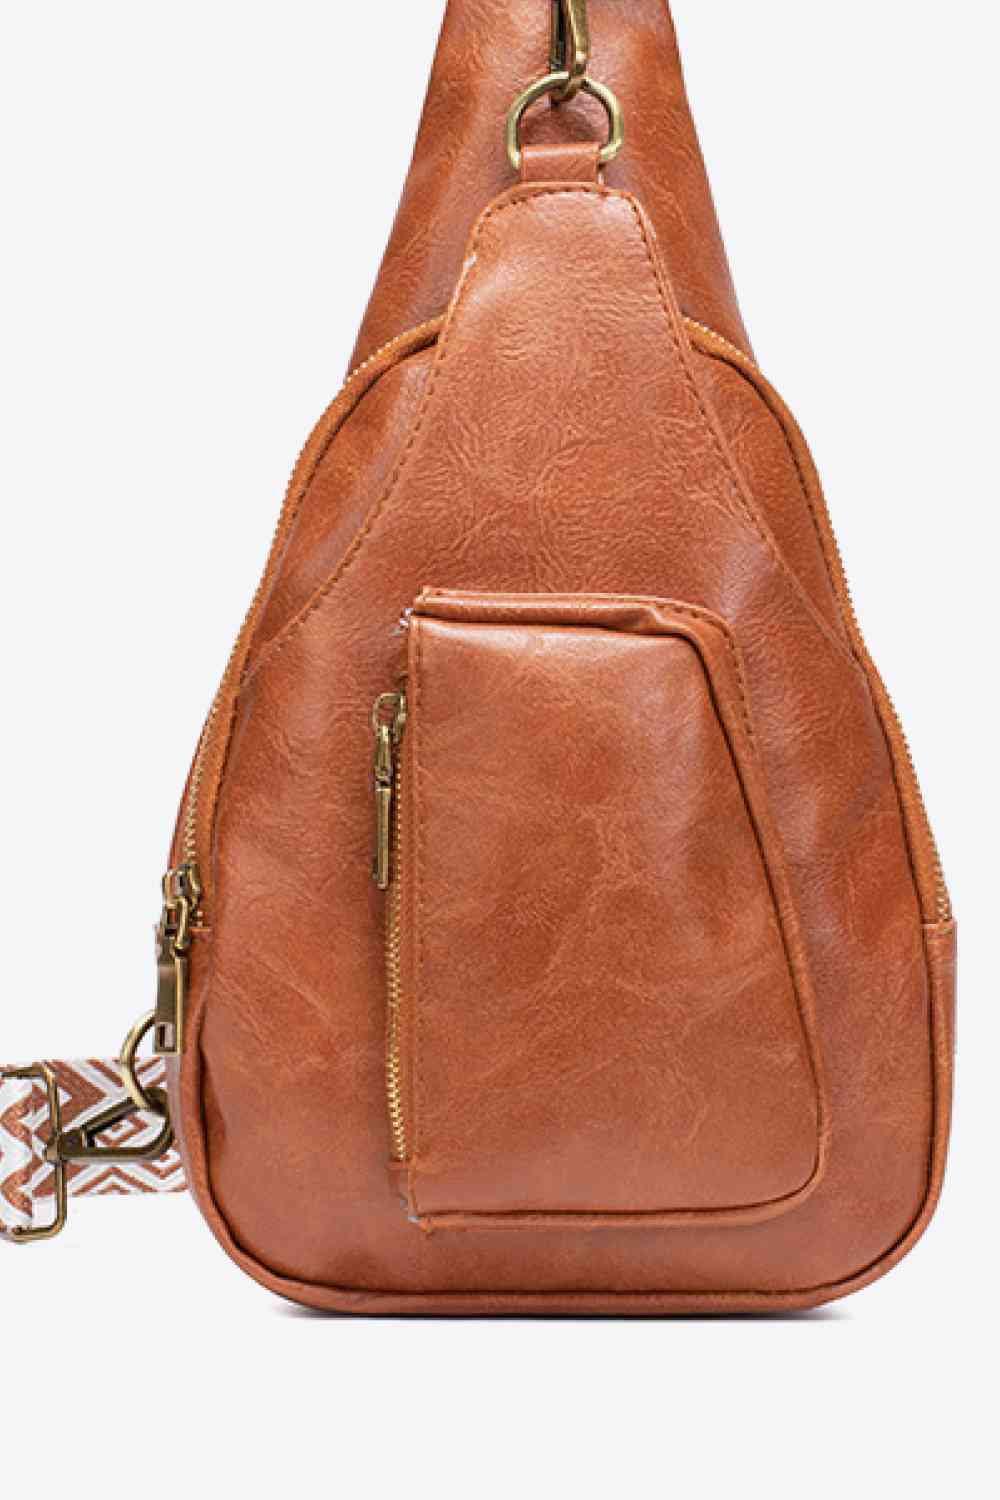 "All the Feels" Medium PU Leather Sling Bag | Adjustable Strap